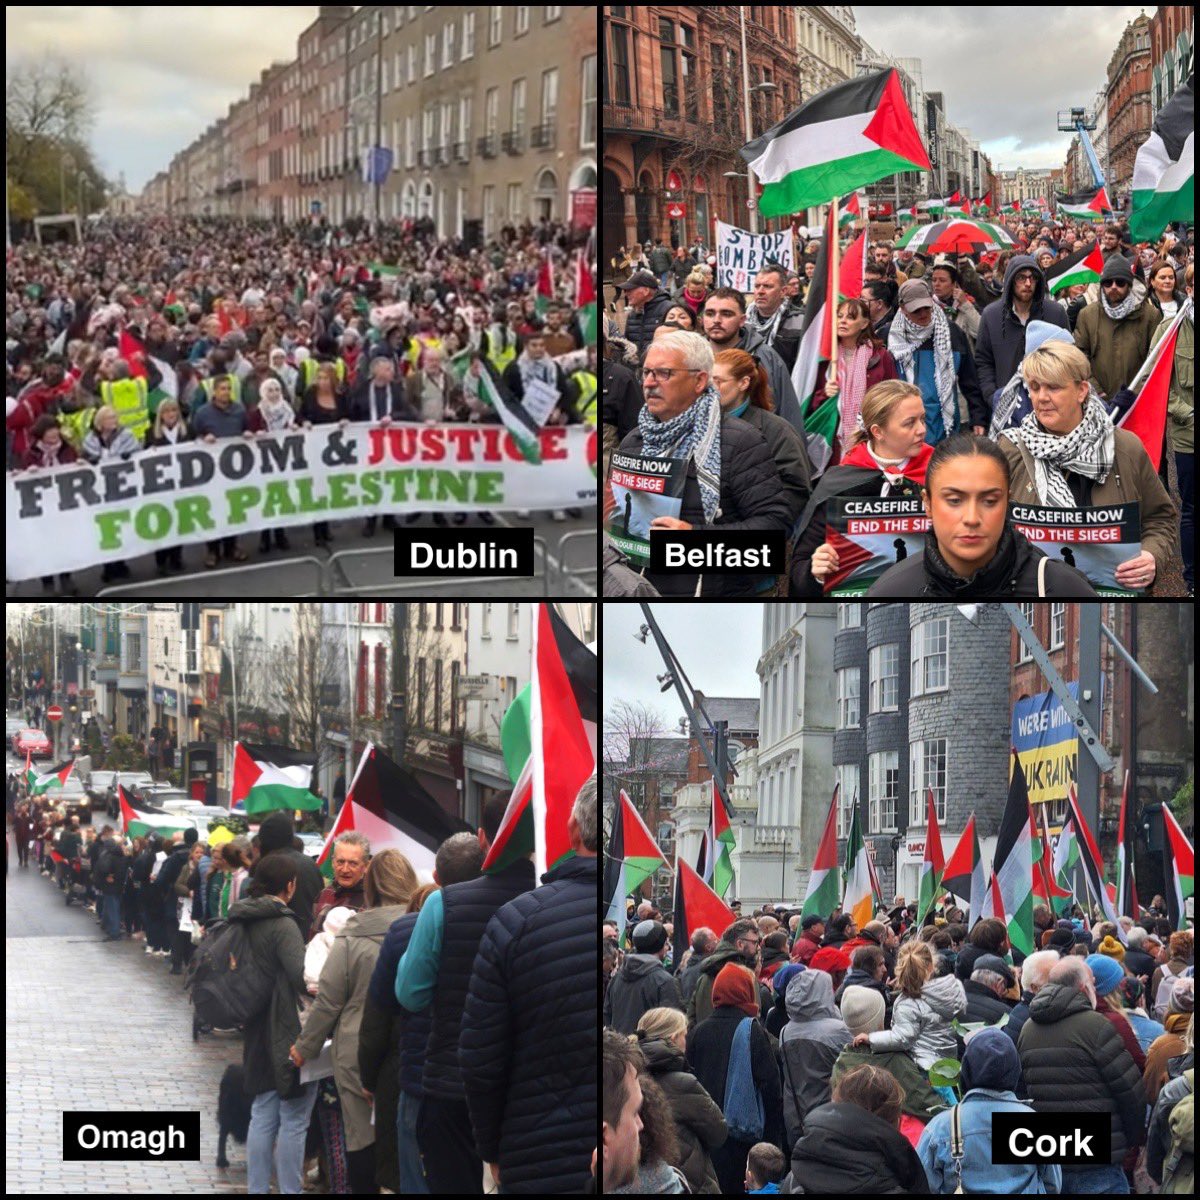 Ireland stands with Palestine 🇮🇪🇵🇸